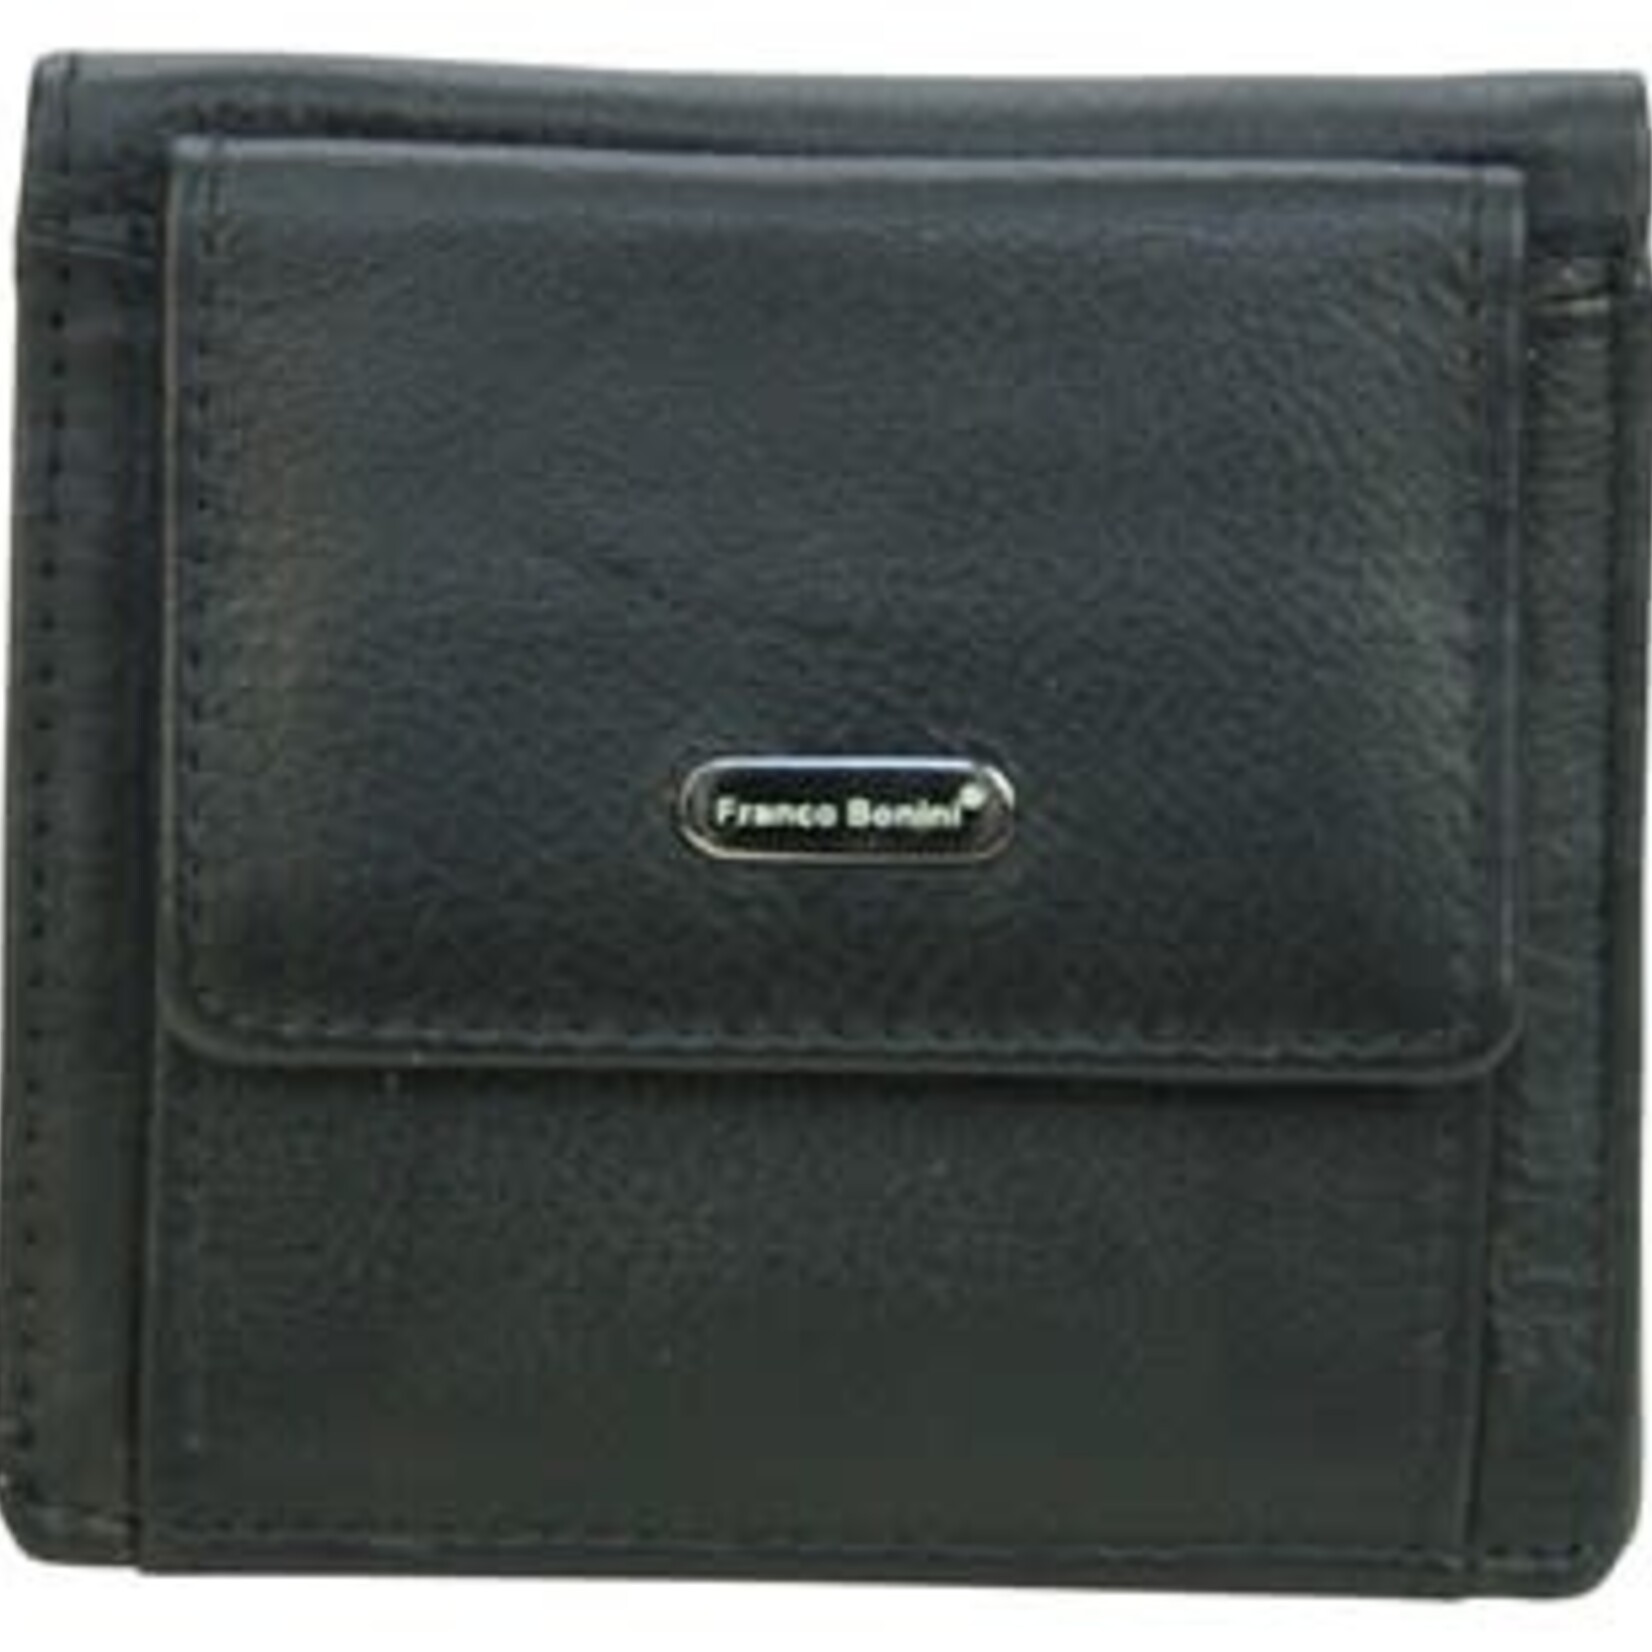 Franco Bonini Black Small Square Leather Coin Wallet